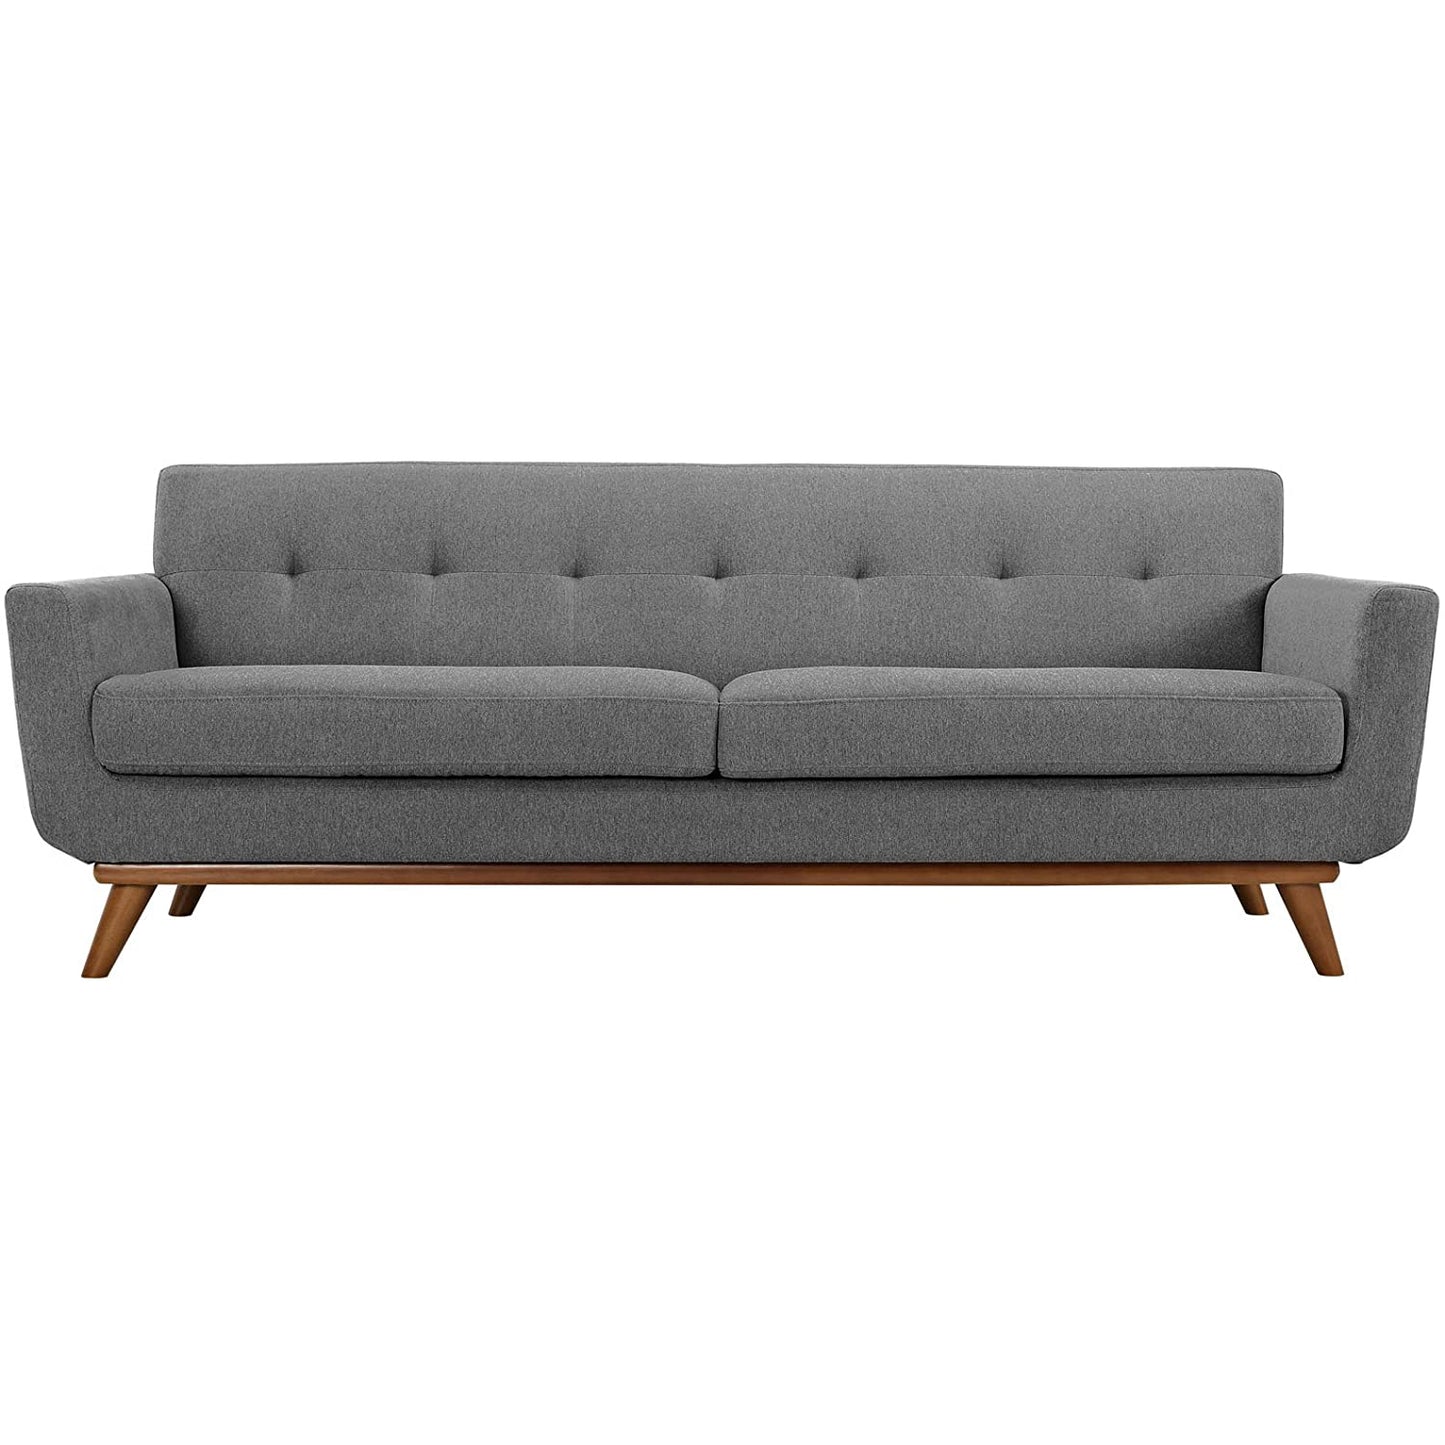 Natural beech wood sofa 85×210 cm - multiple colors - DECO79